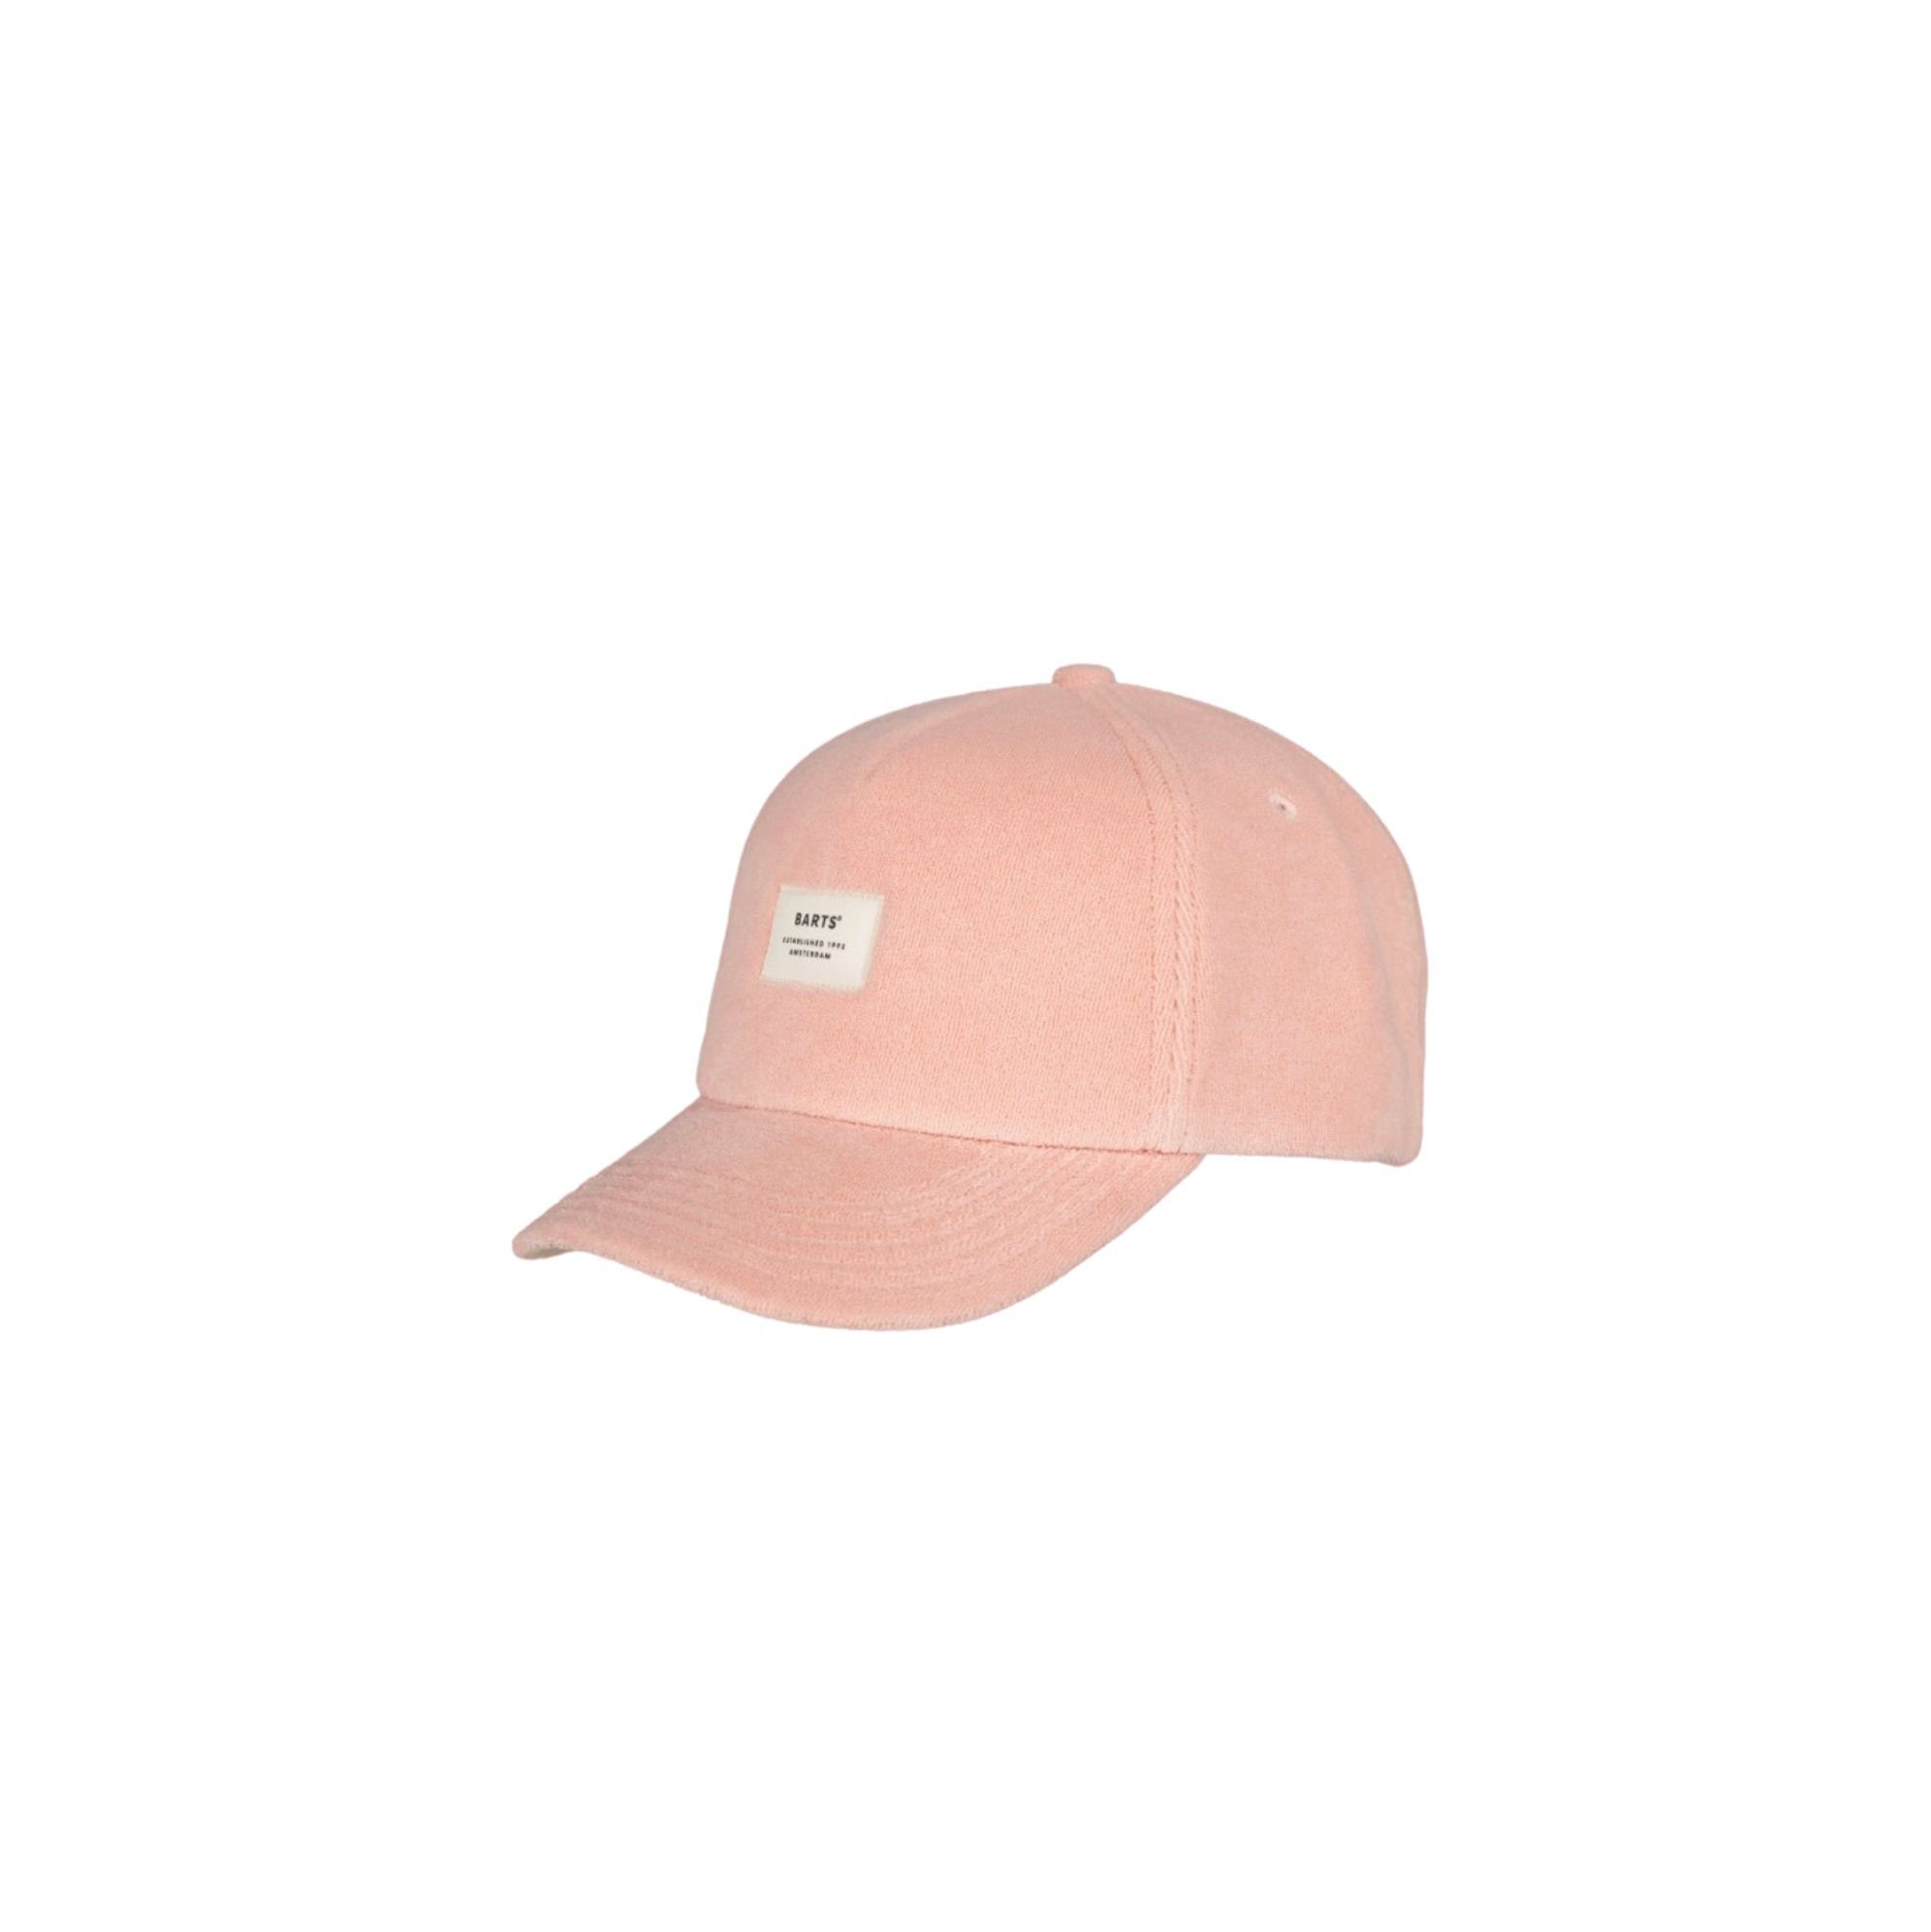 oder Mädchen Dusty in Cap beige Baseball Größenverstellbar Barts Begonia Cap Baseball pink Pink rosa, Cap